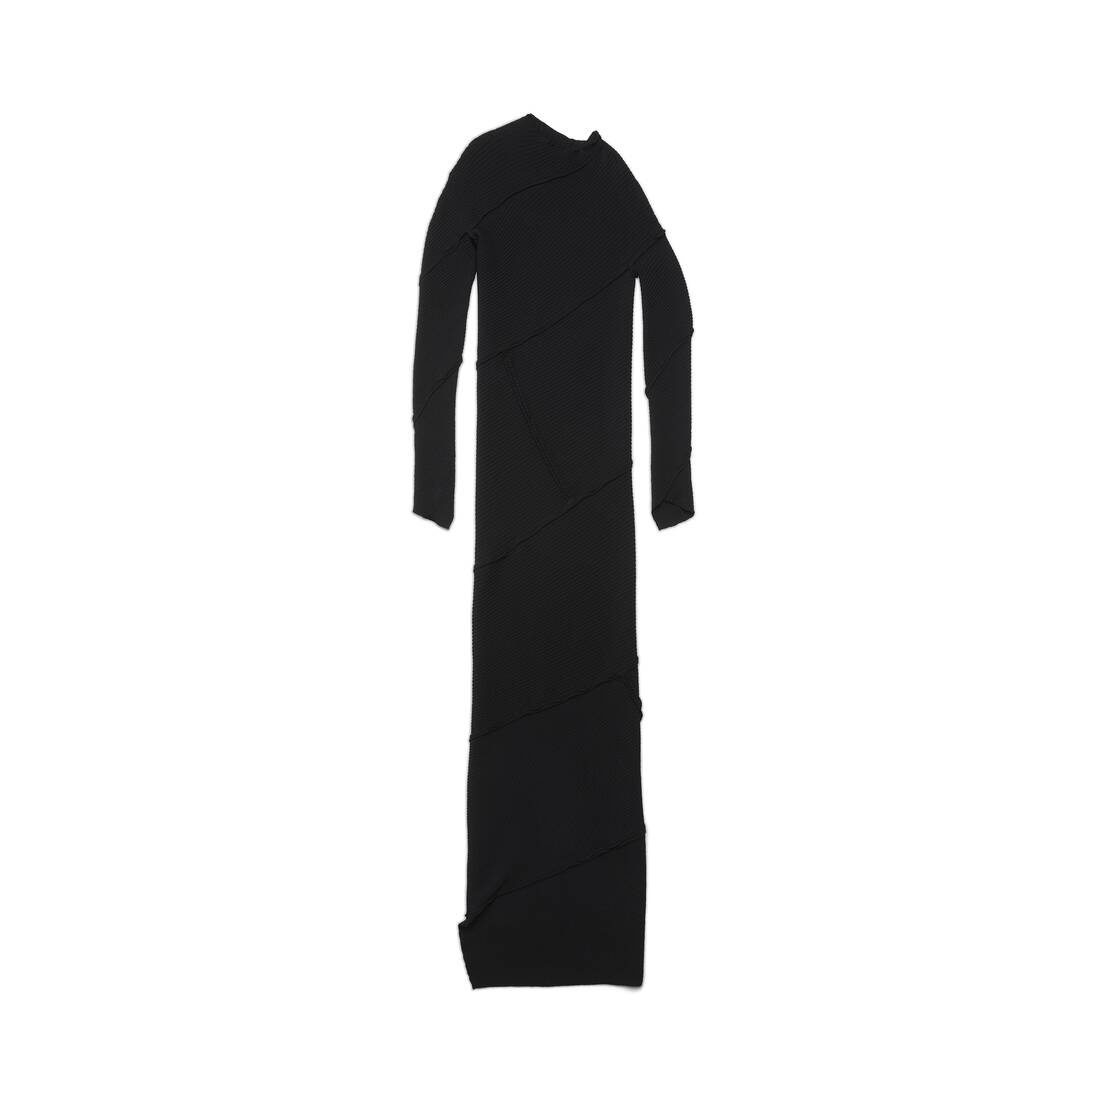 Women's Spiral Maxi Dress in Black - 1